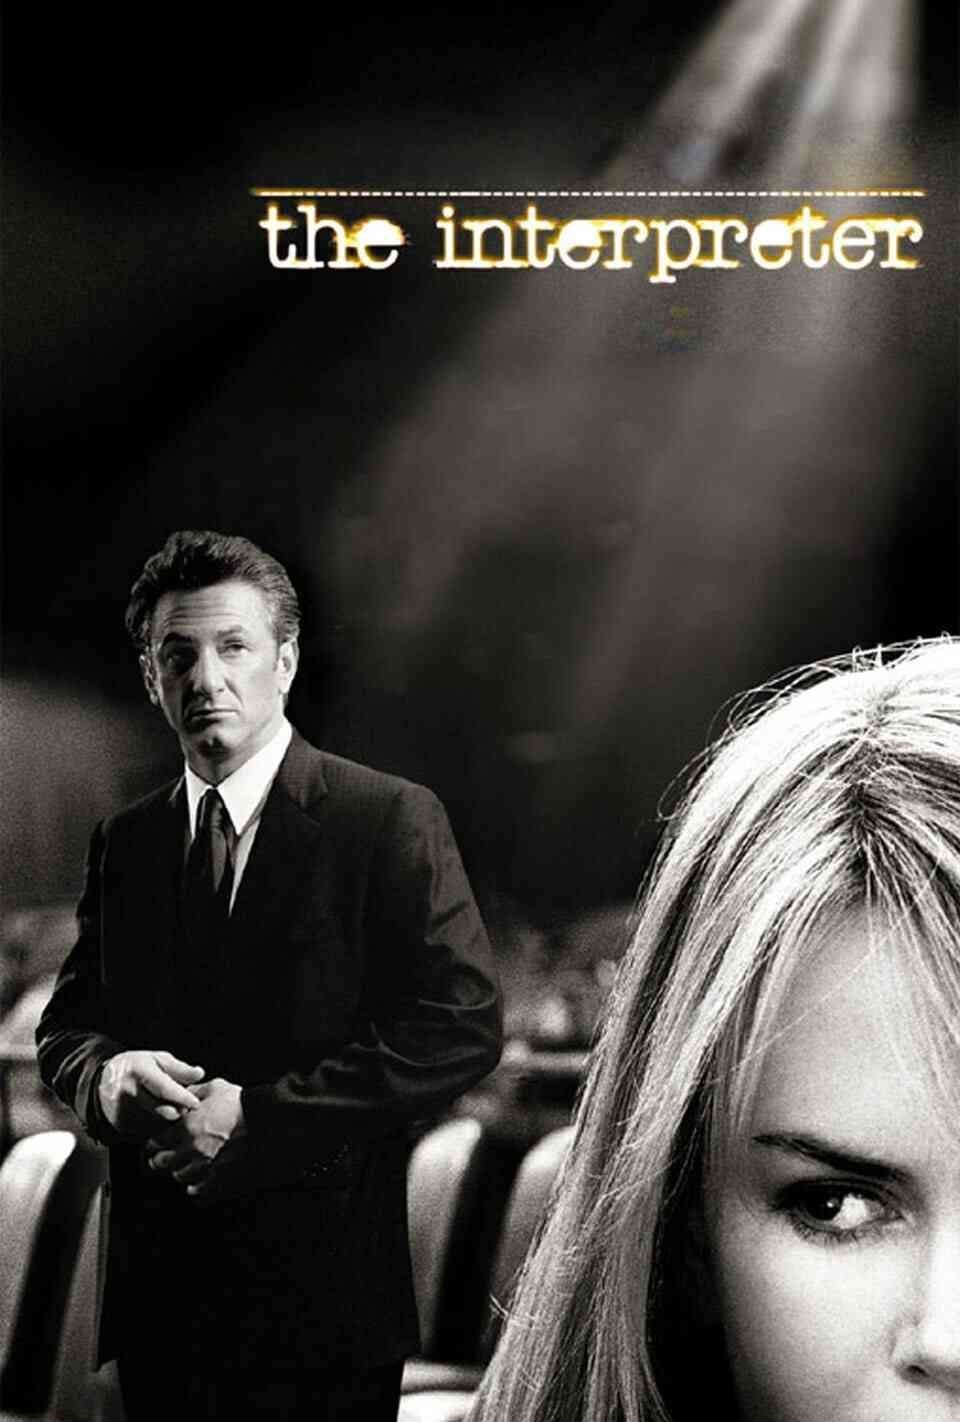 Read The Interpreter screenplay.